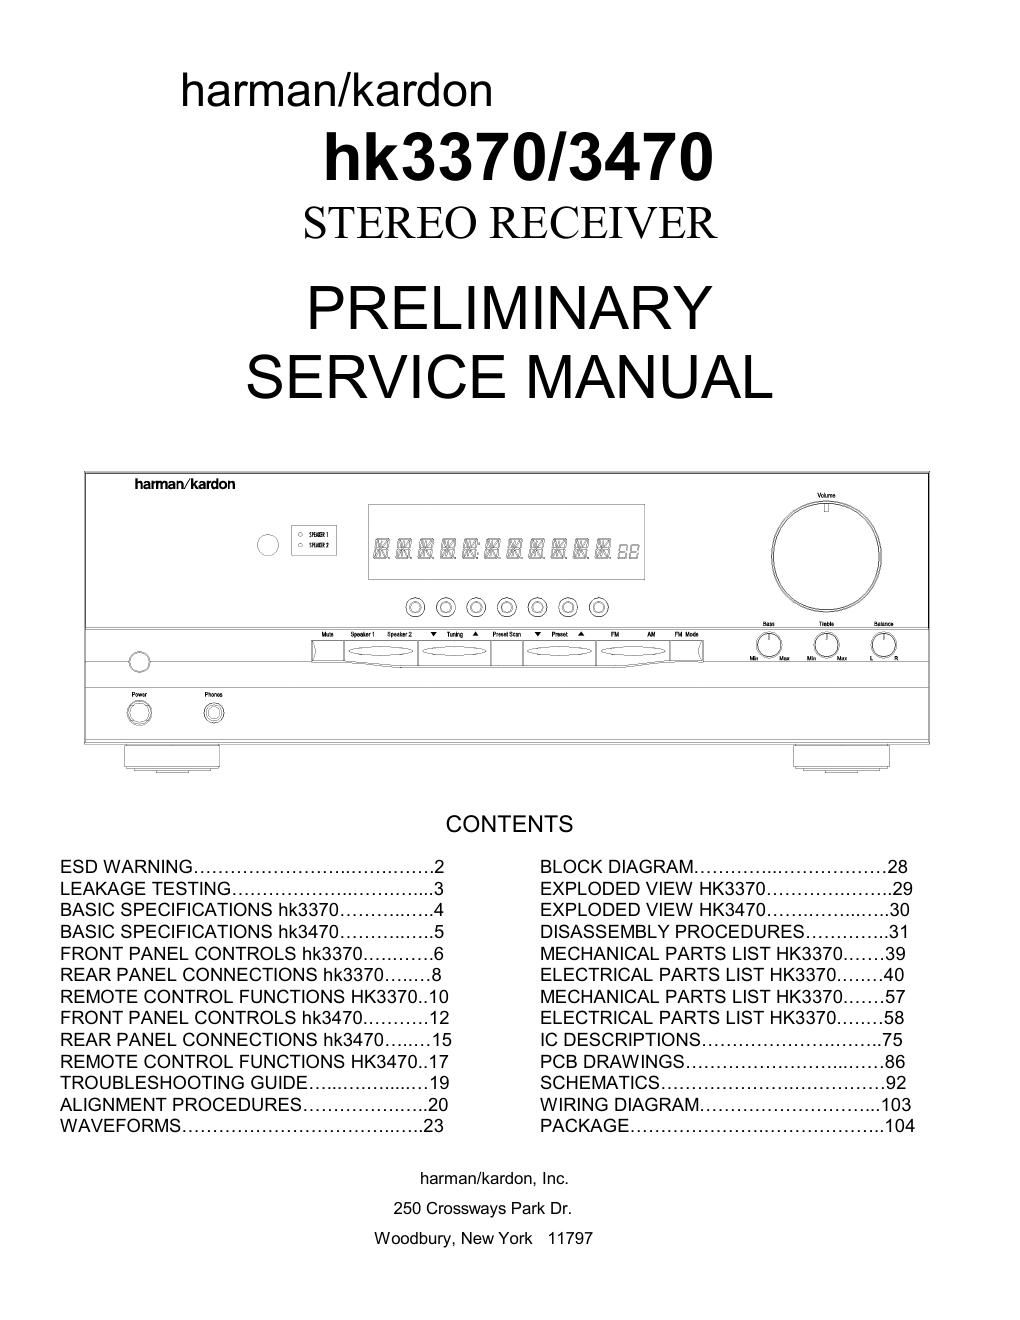 harman kardon hk 3470 service manual 2